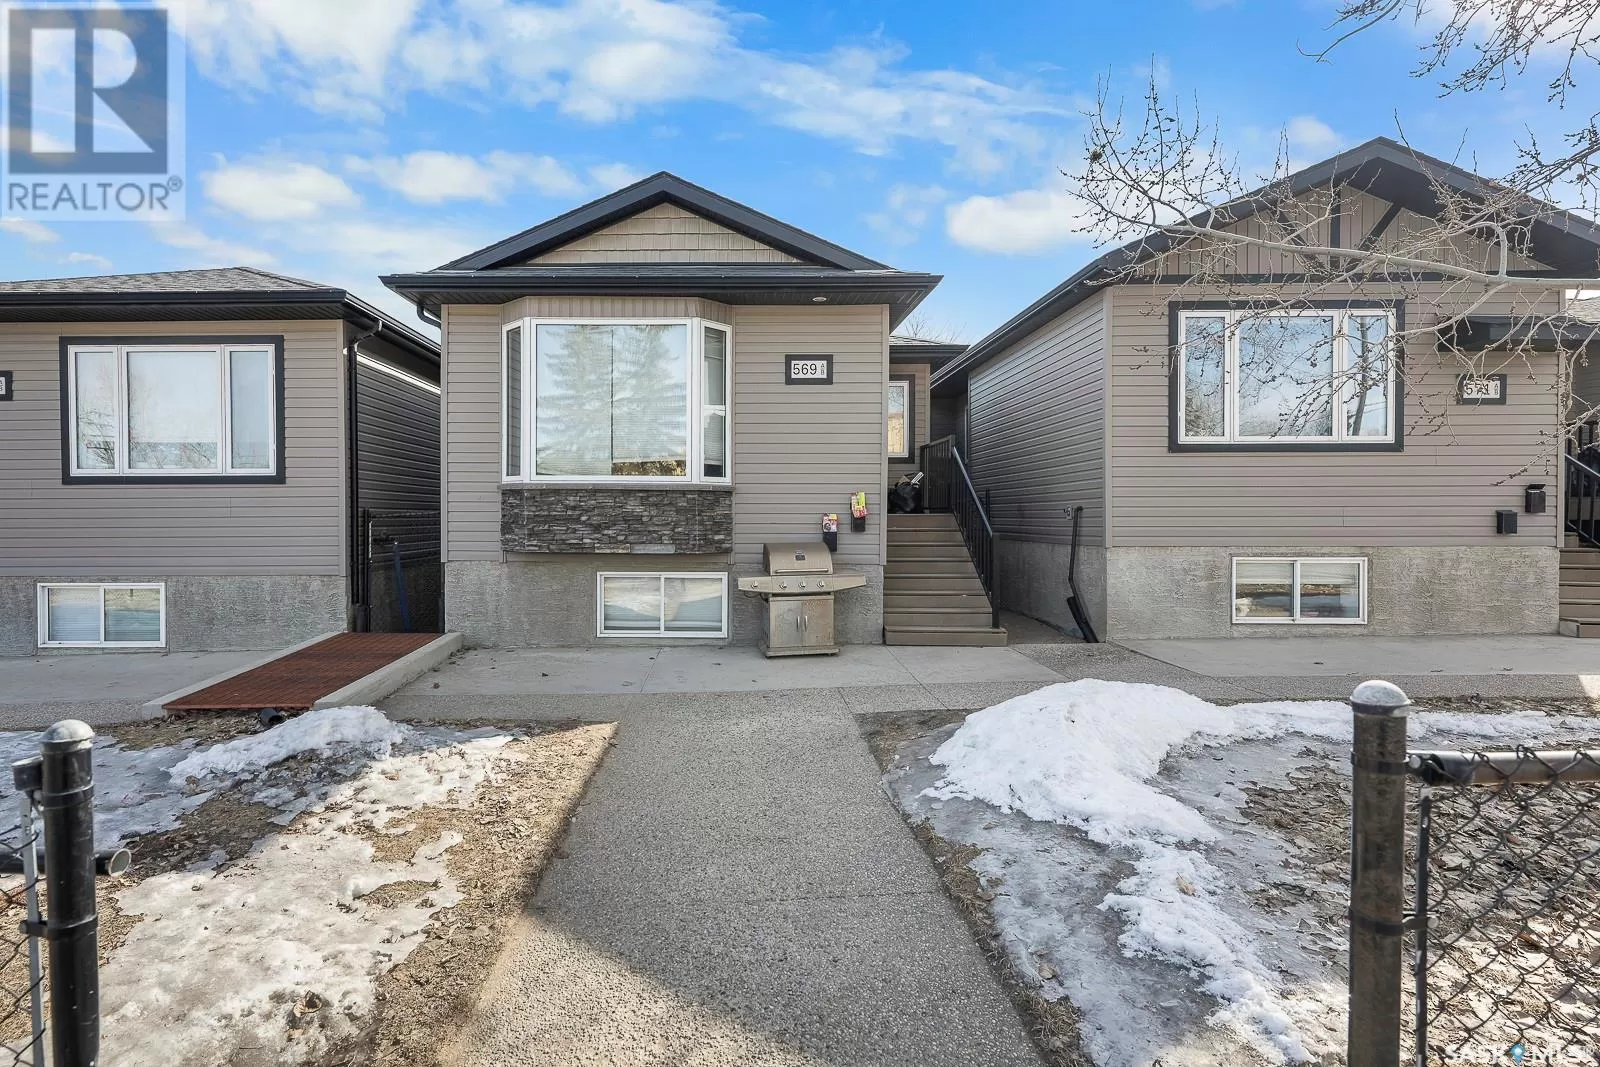 House for rent: 569 Elphinstone Street, Regina, Saskatchewan S4R 3W8